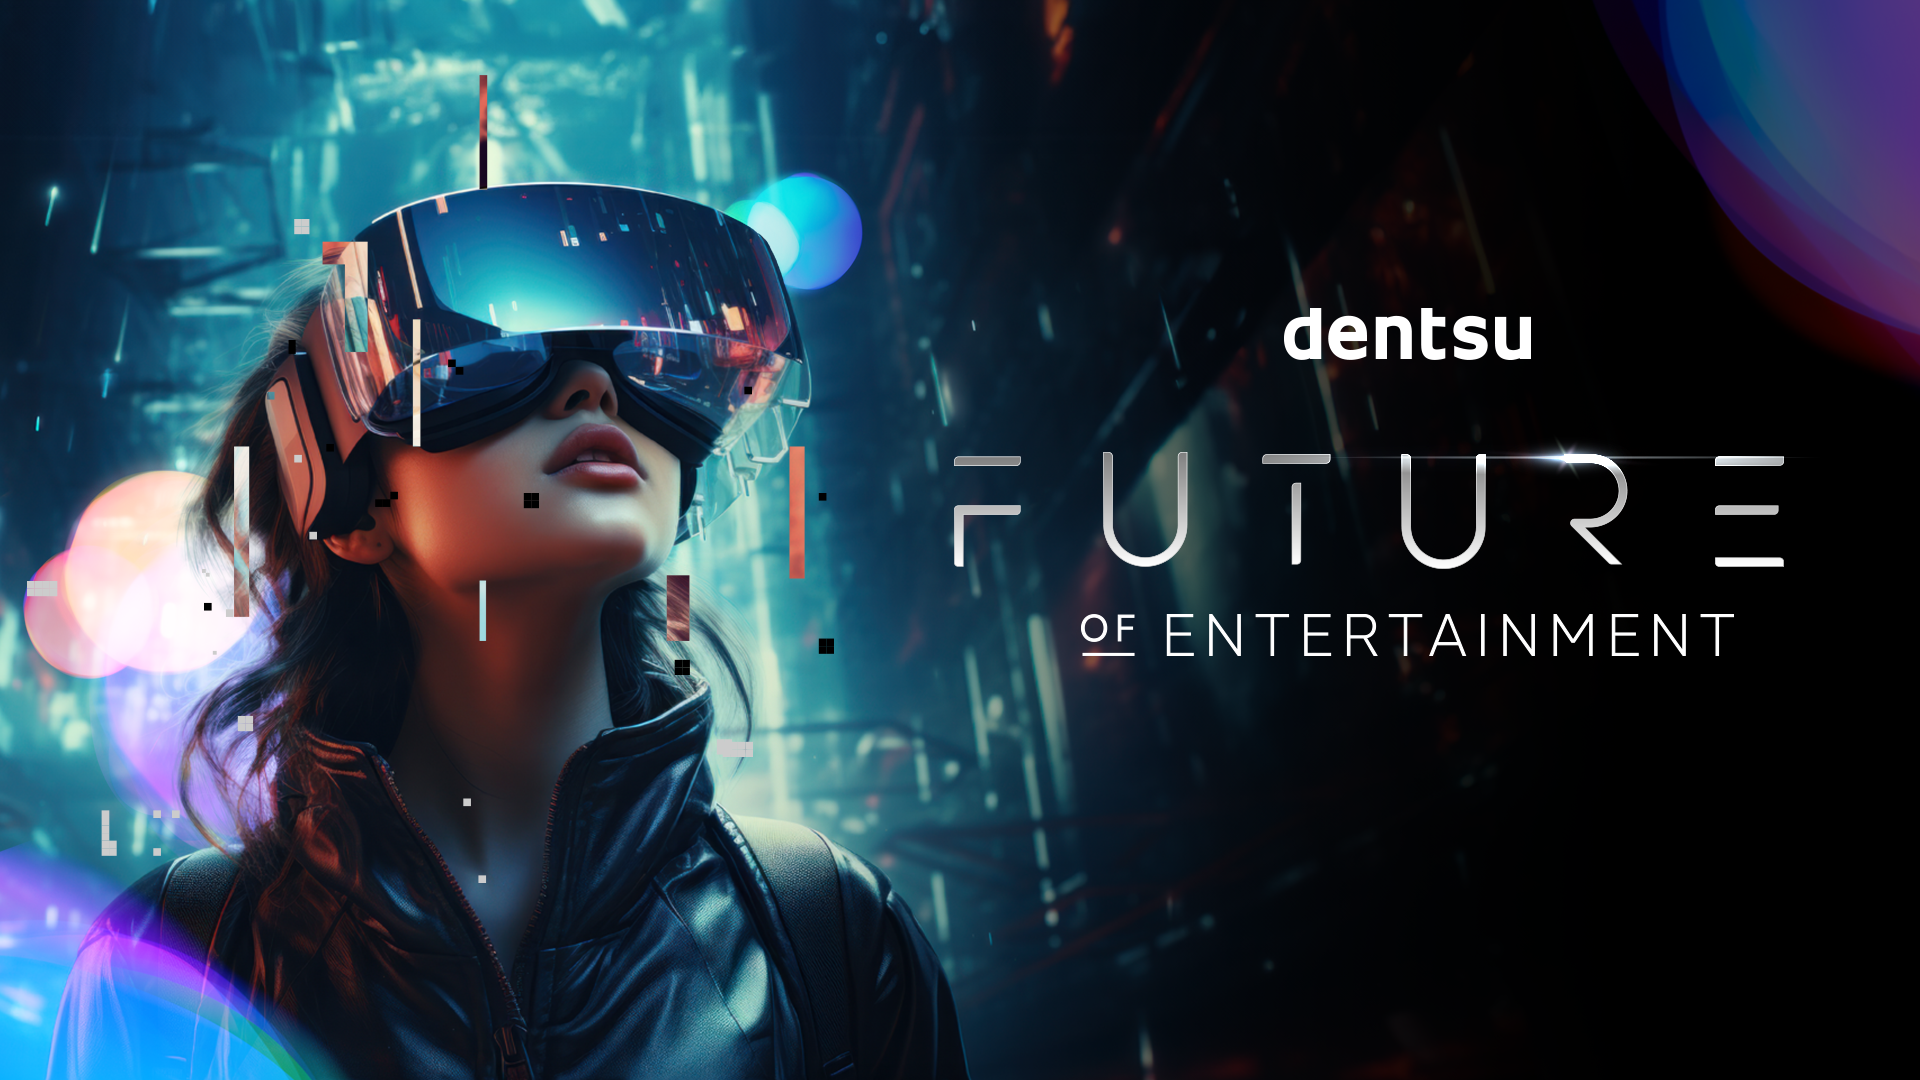 Future of Entertainment - dentsu APAC